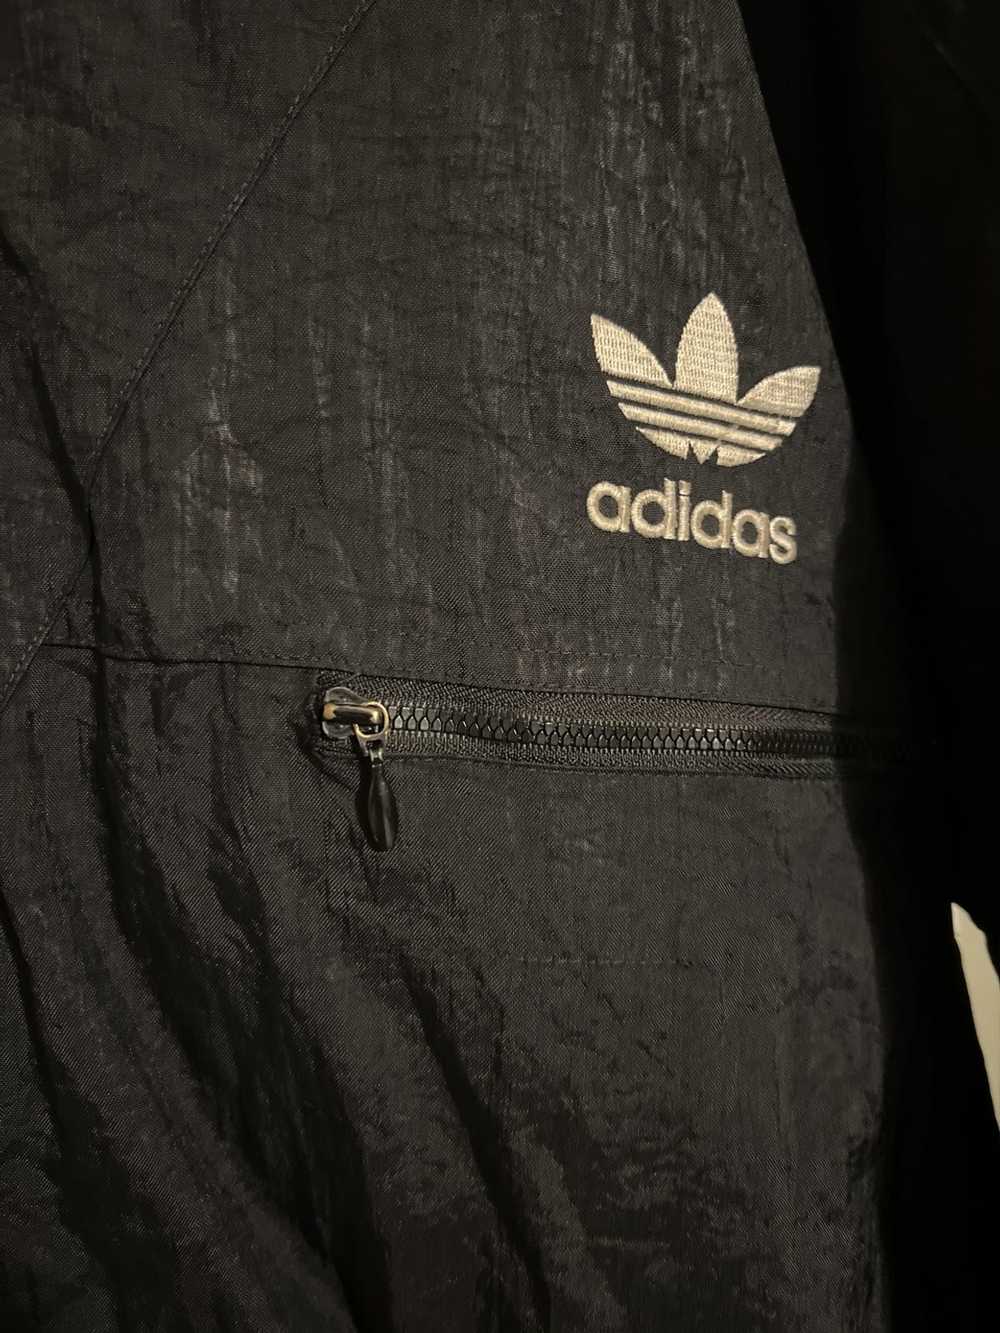 Adidas Vintage adidas originals jacket - image 3